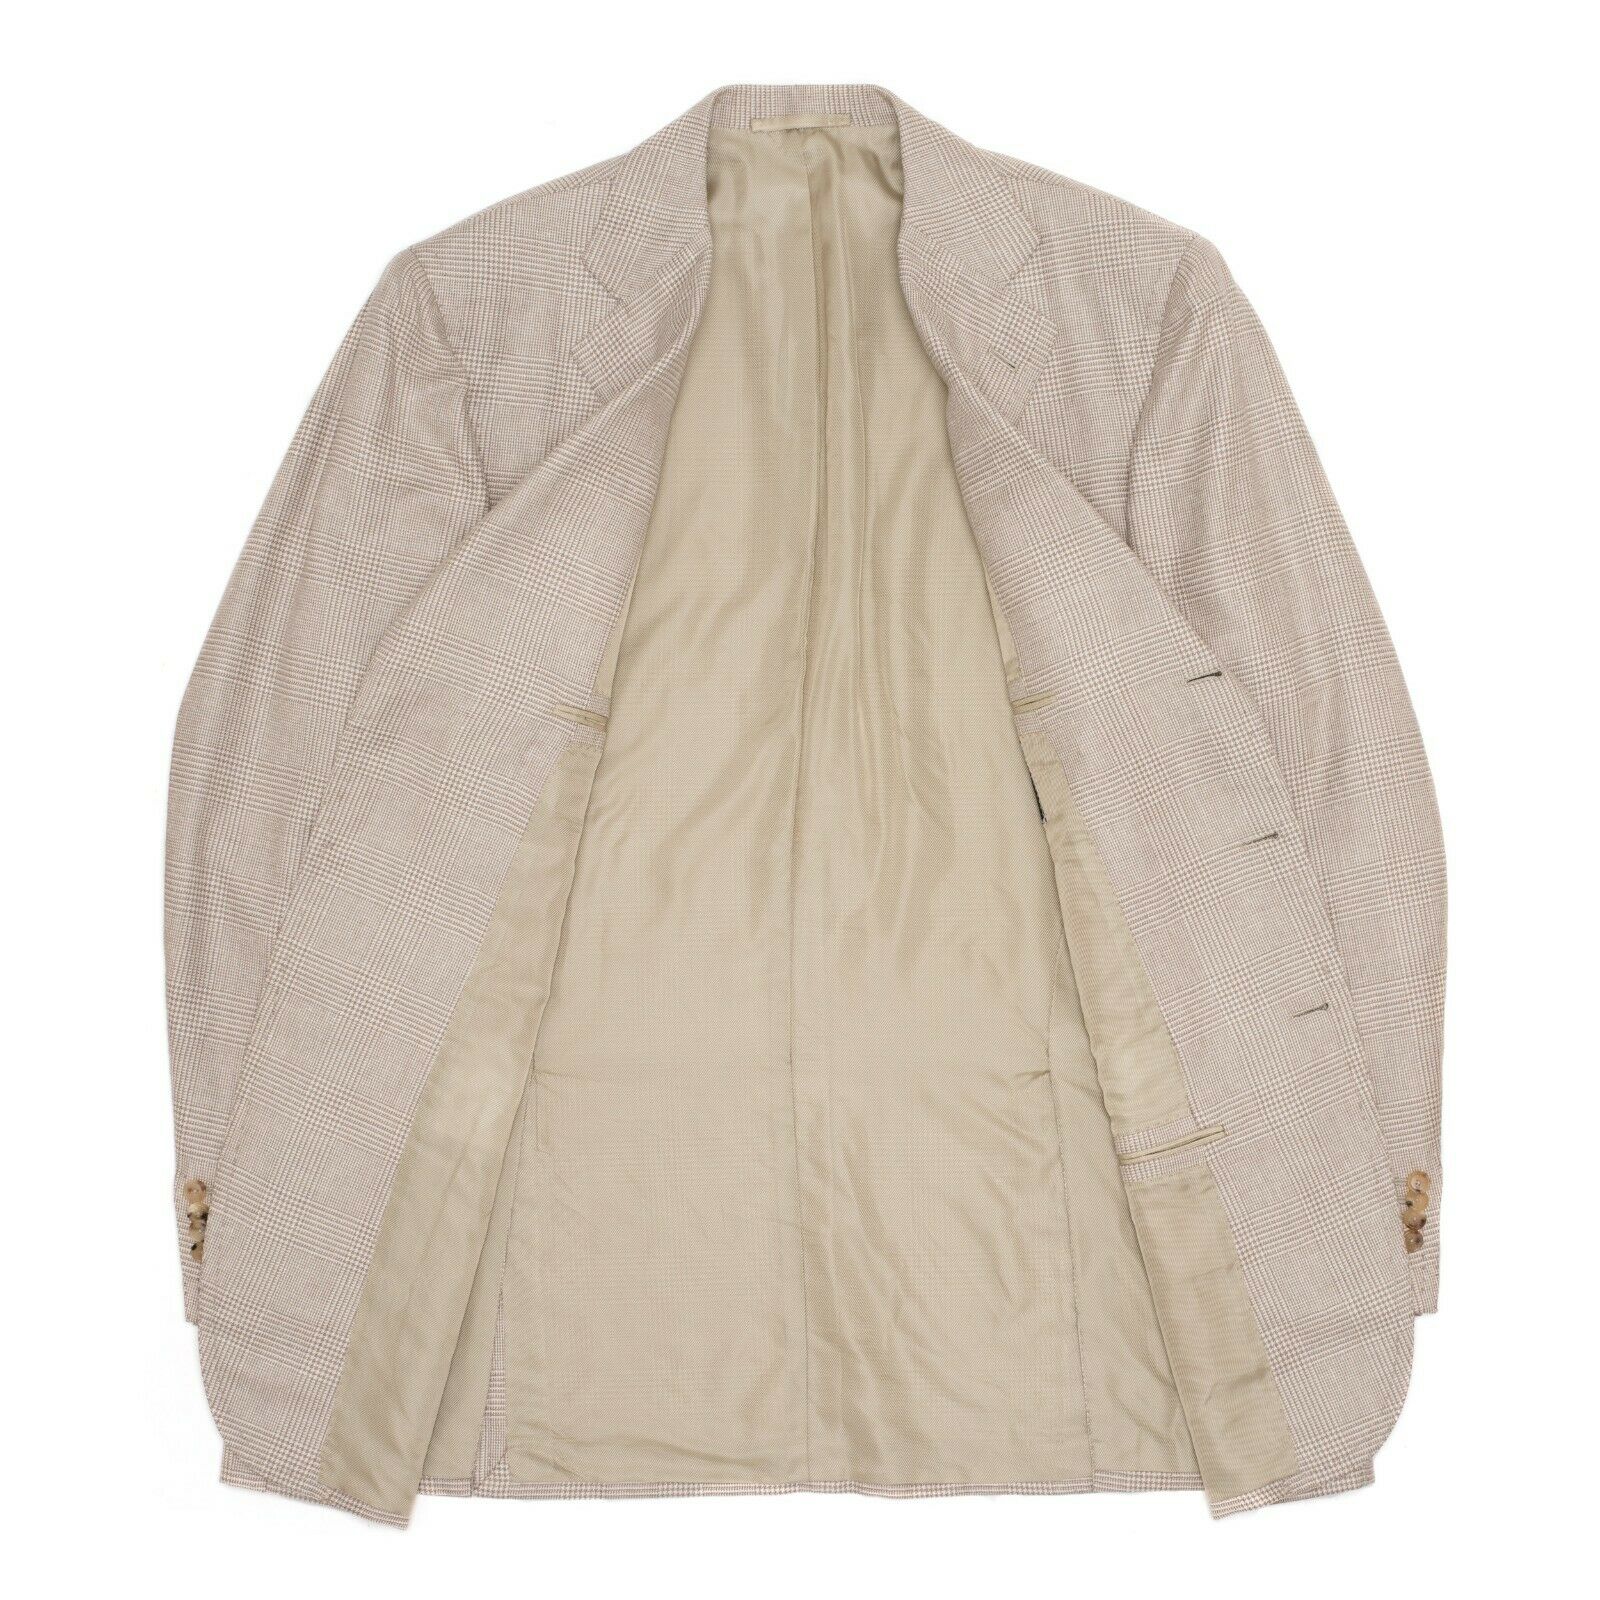 Cesare ATTOLINI Handmade Glen Plaid Silk-Wool Super 150' Jacket 58 NEW US 48 CESARE ATTOLINI